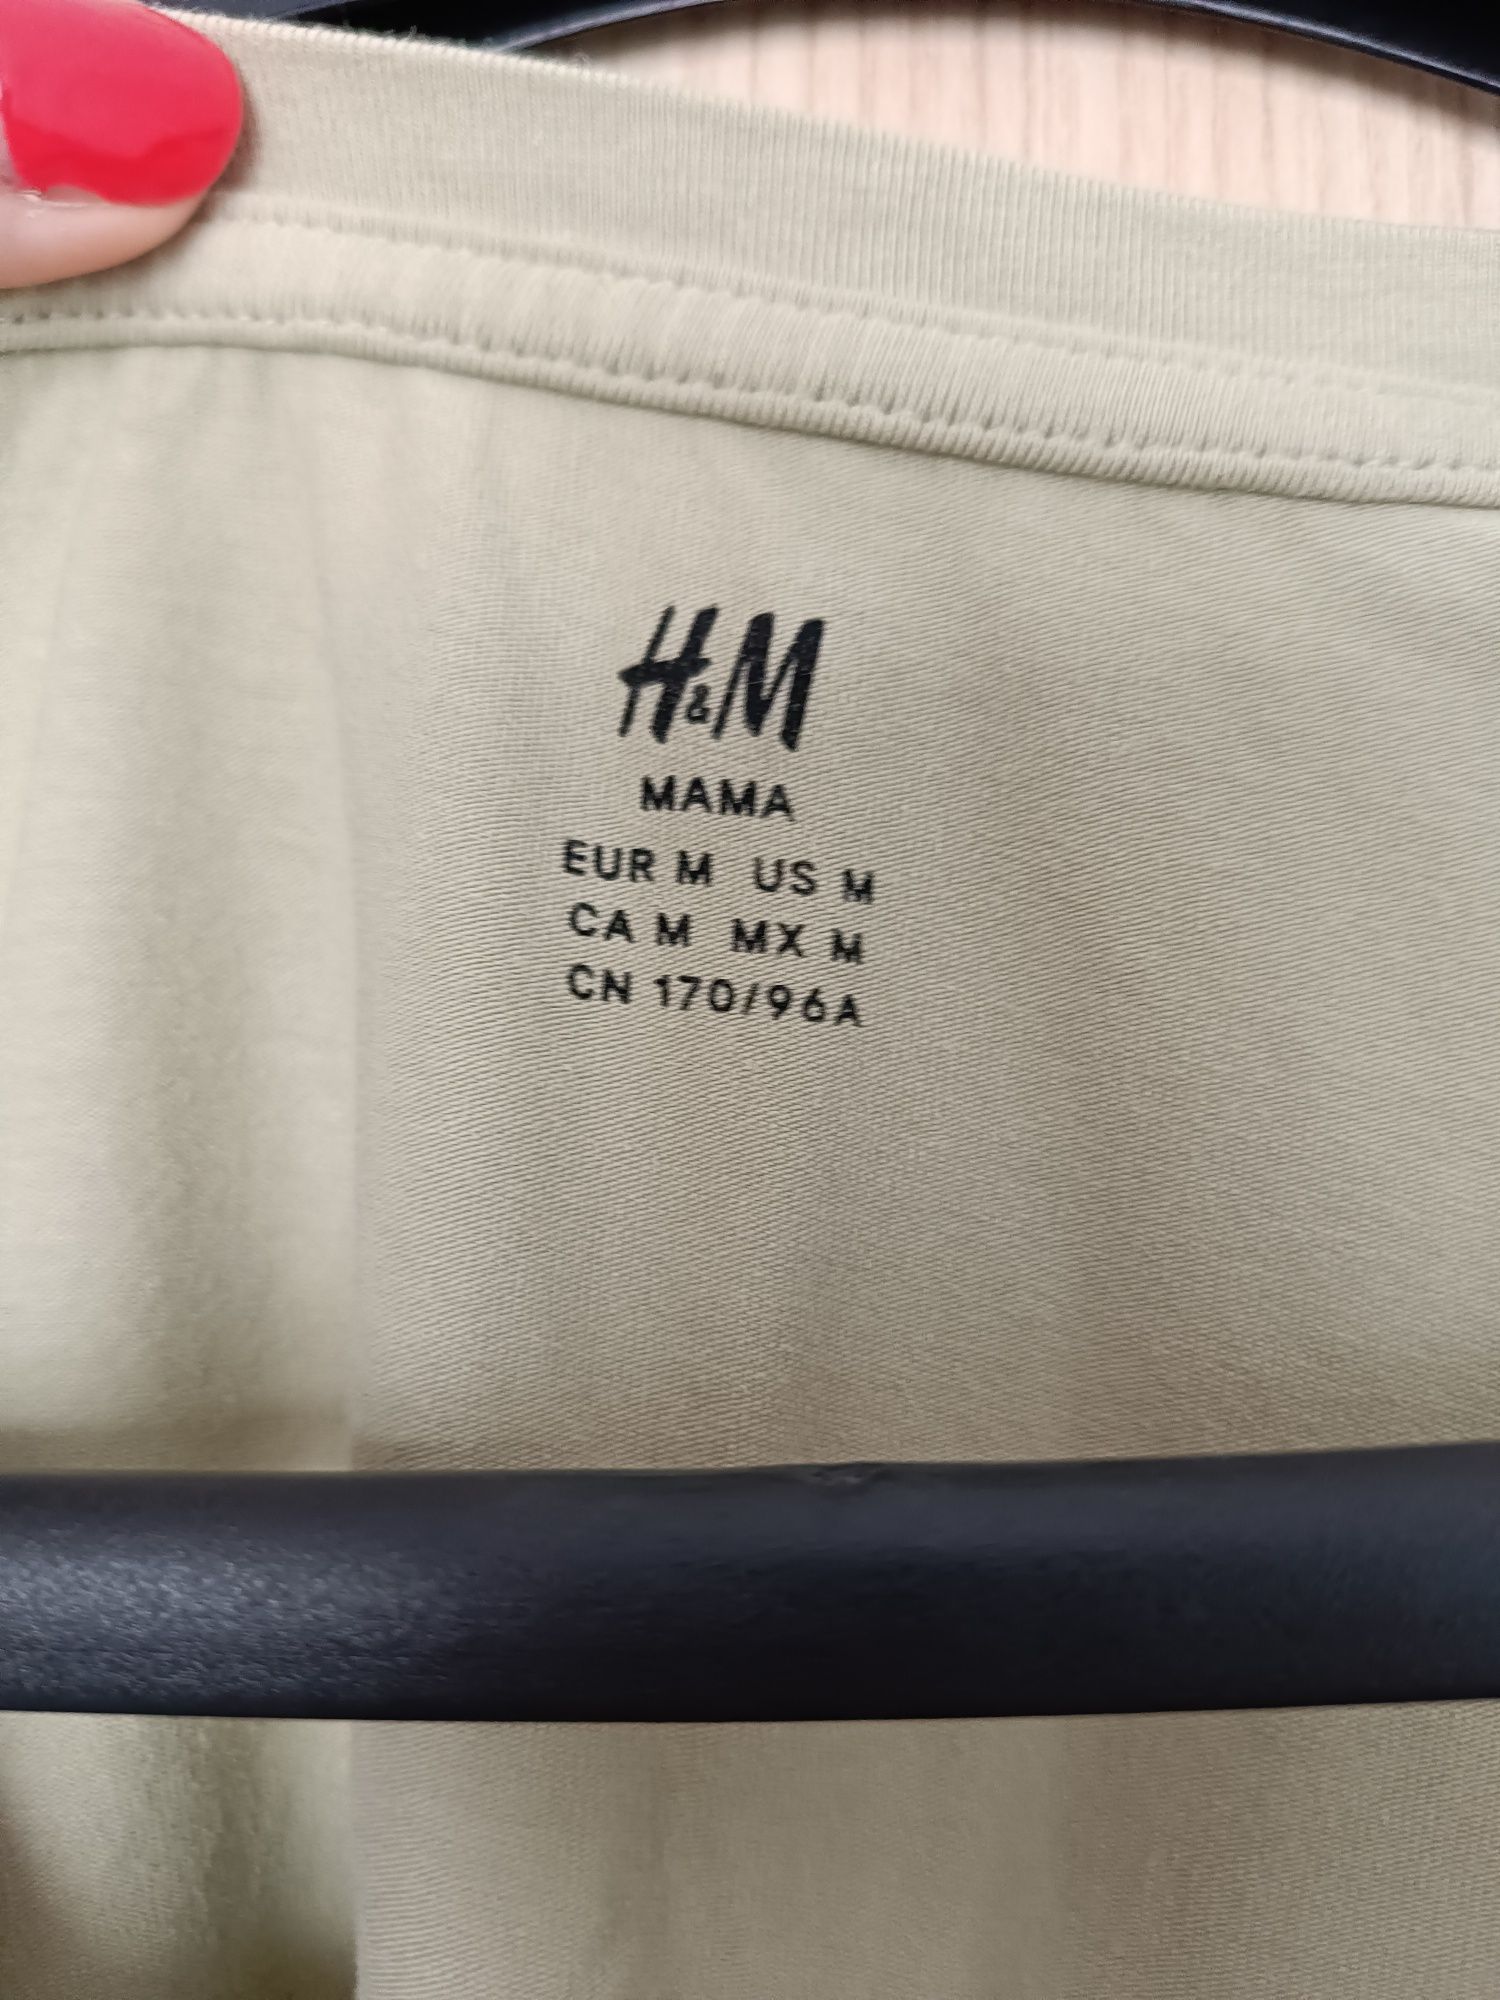 Oliwkowa bluzka ciążowa H&M mama M 38